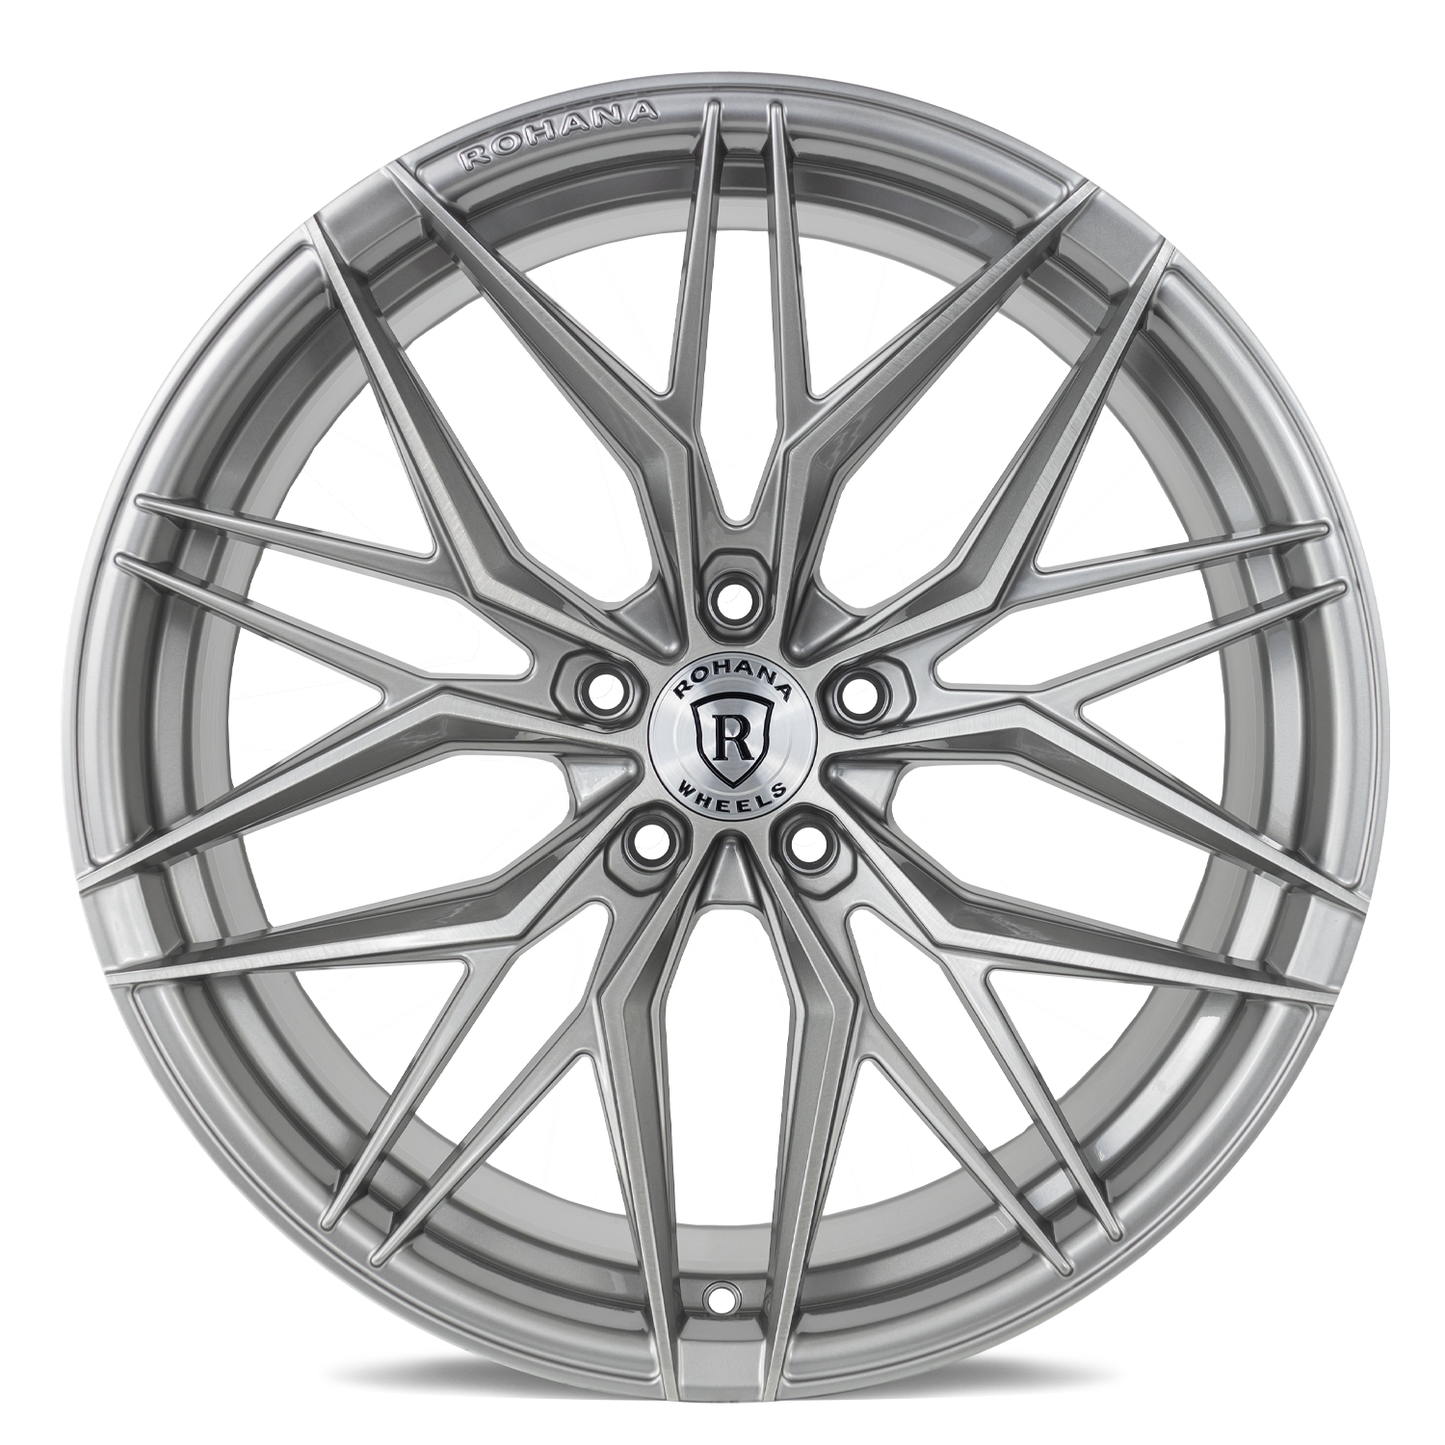 C8 Corvette Wheel: Rohana RFX17 - Brushed Titanium (face)